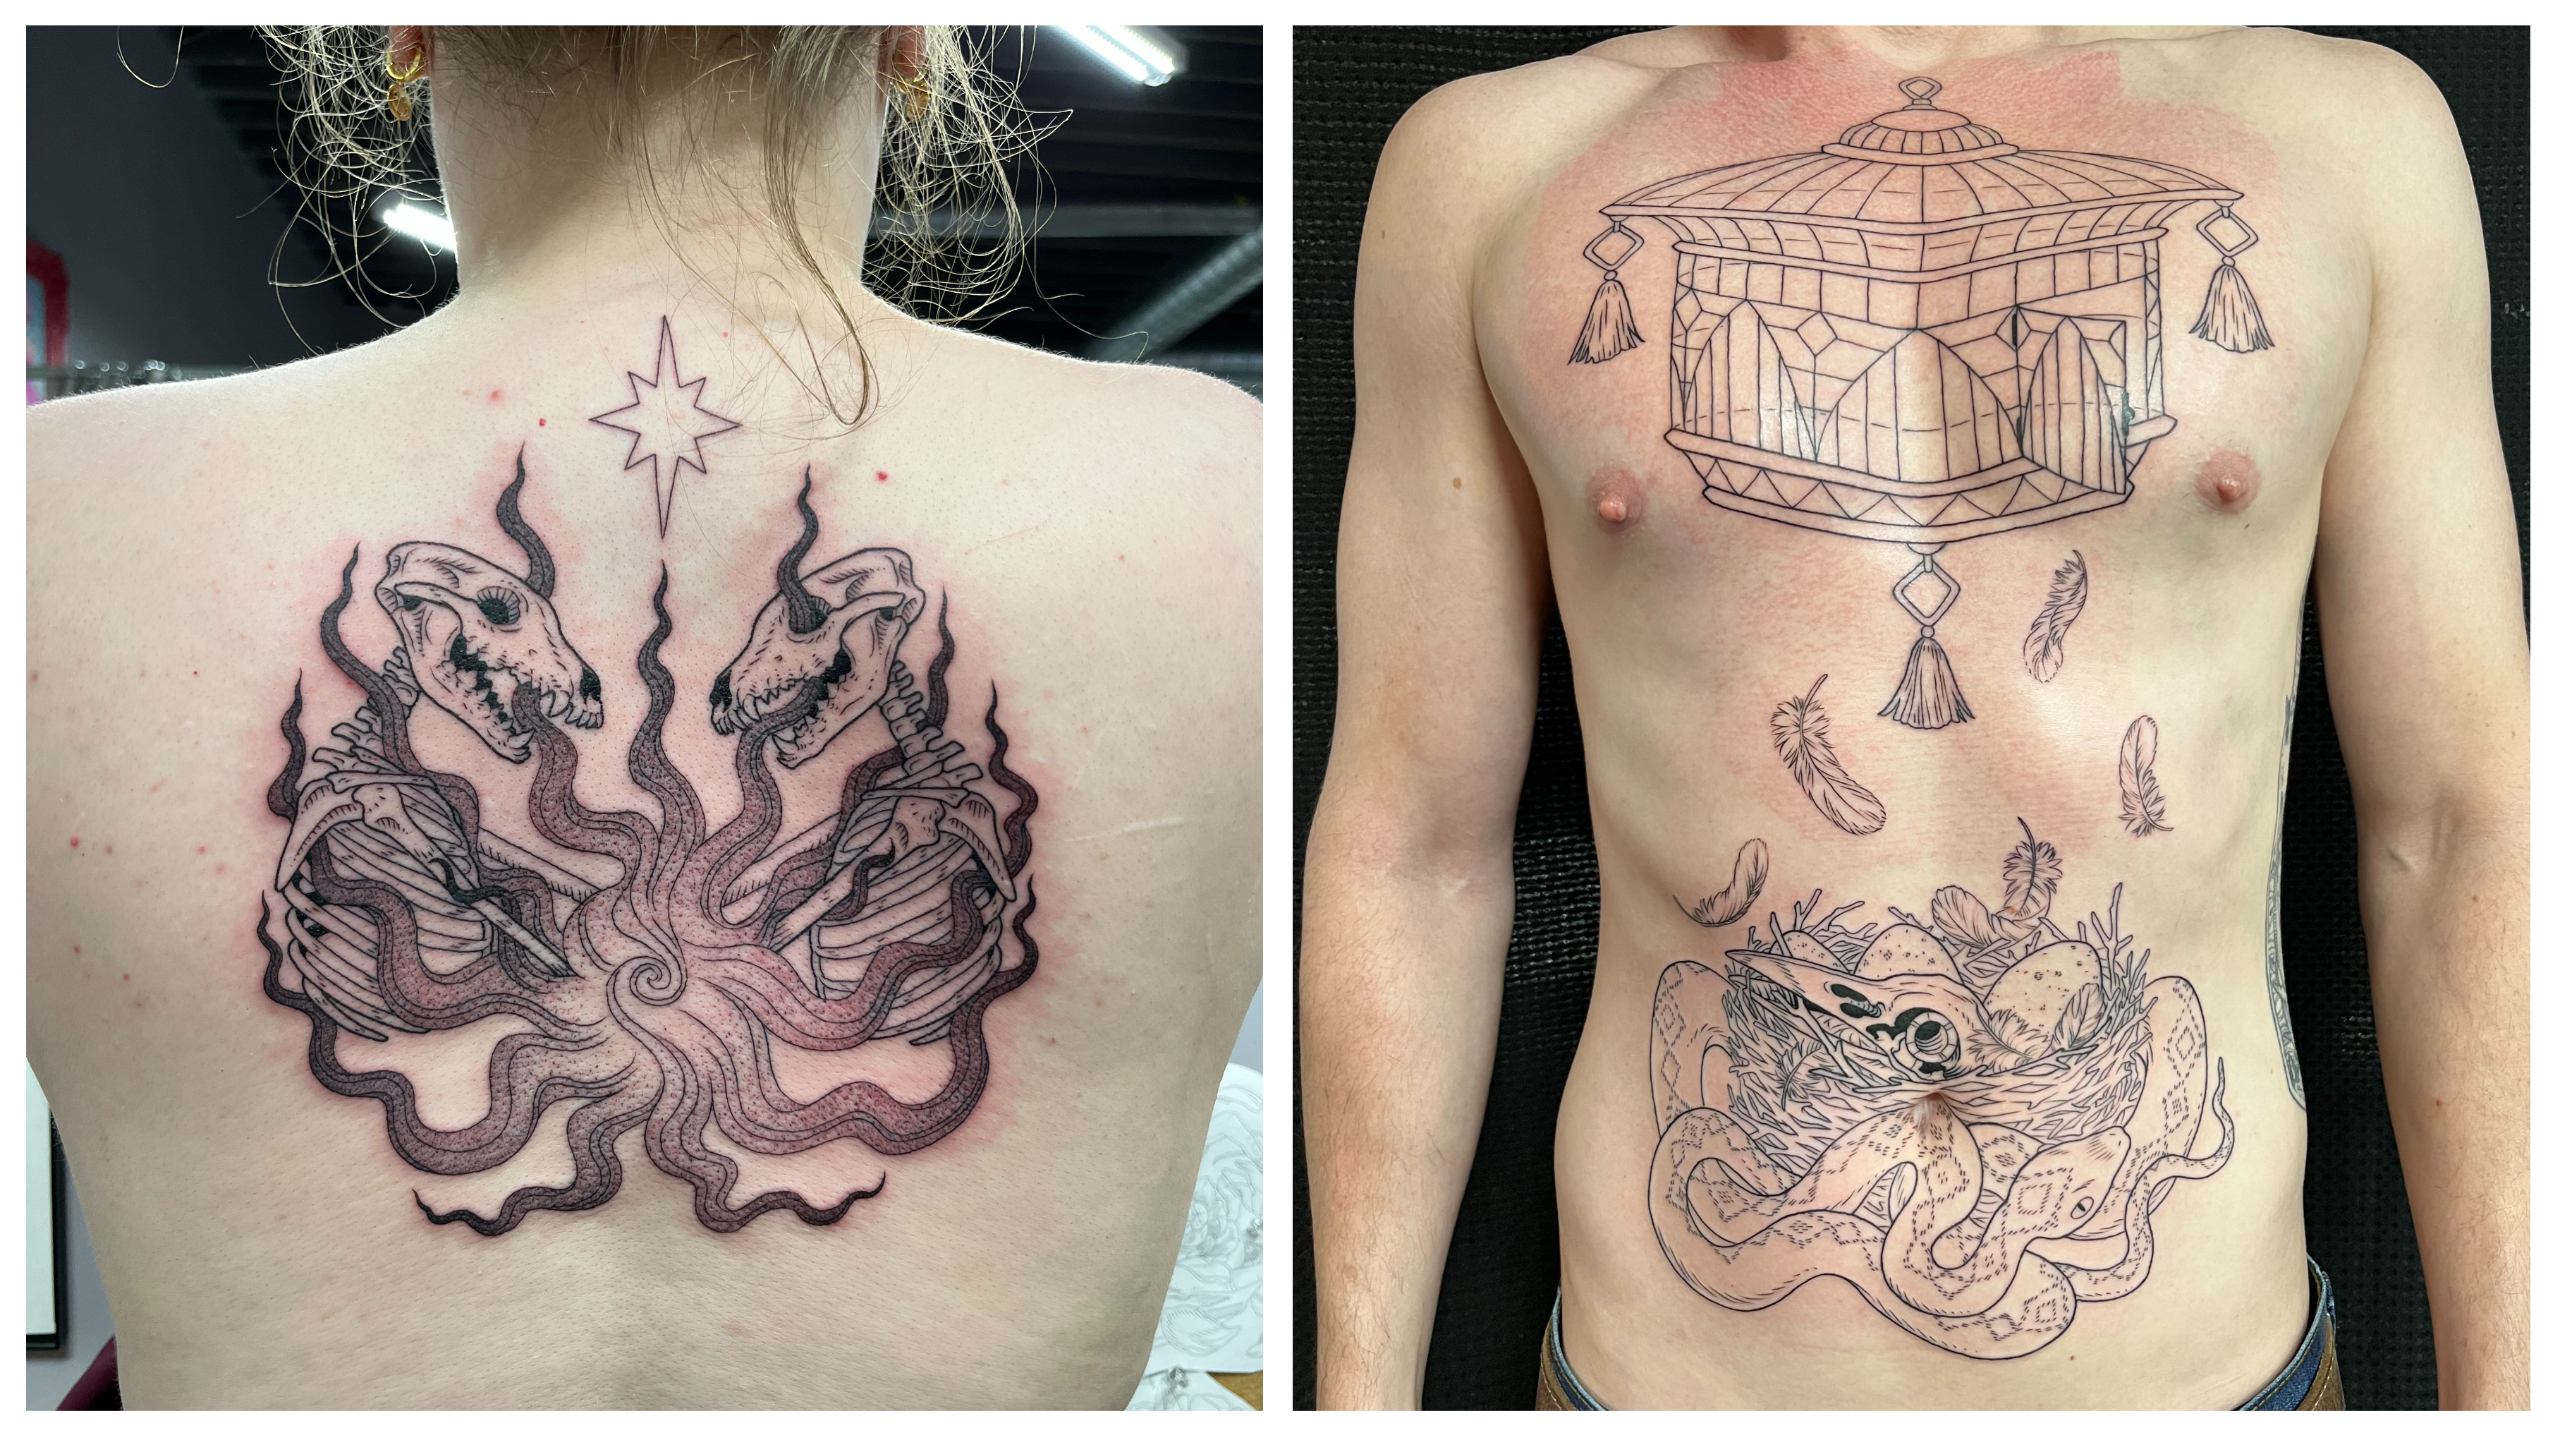 Jackalope Tattoos Each One Weirder Than the Last  Ink Art Tattoos